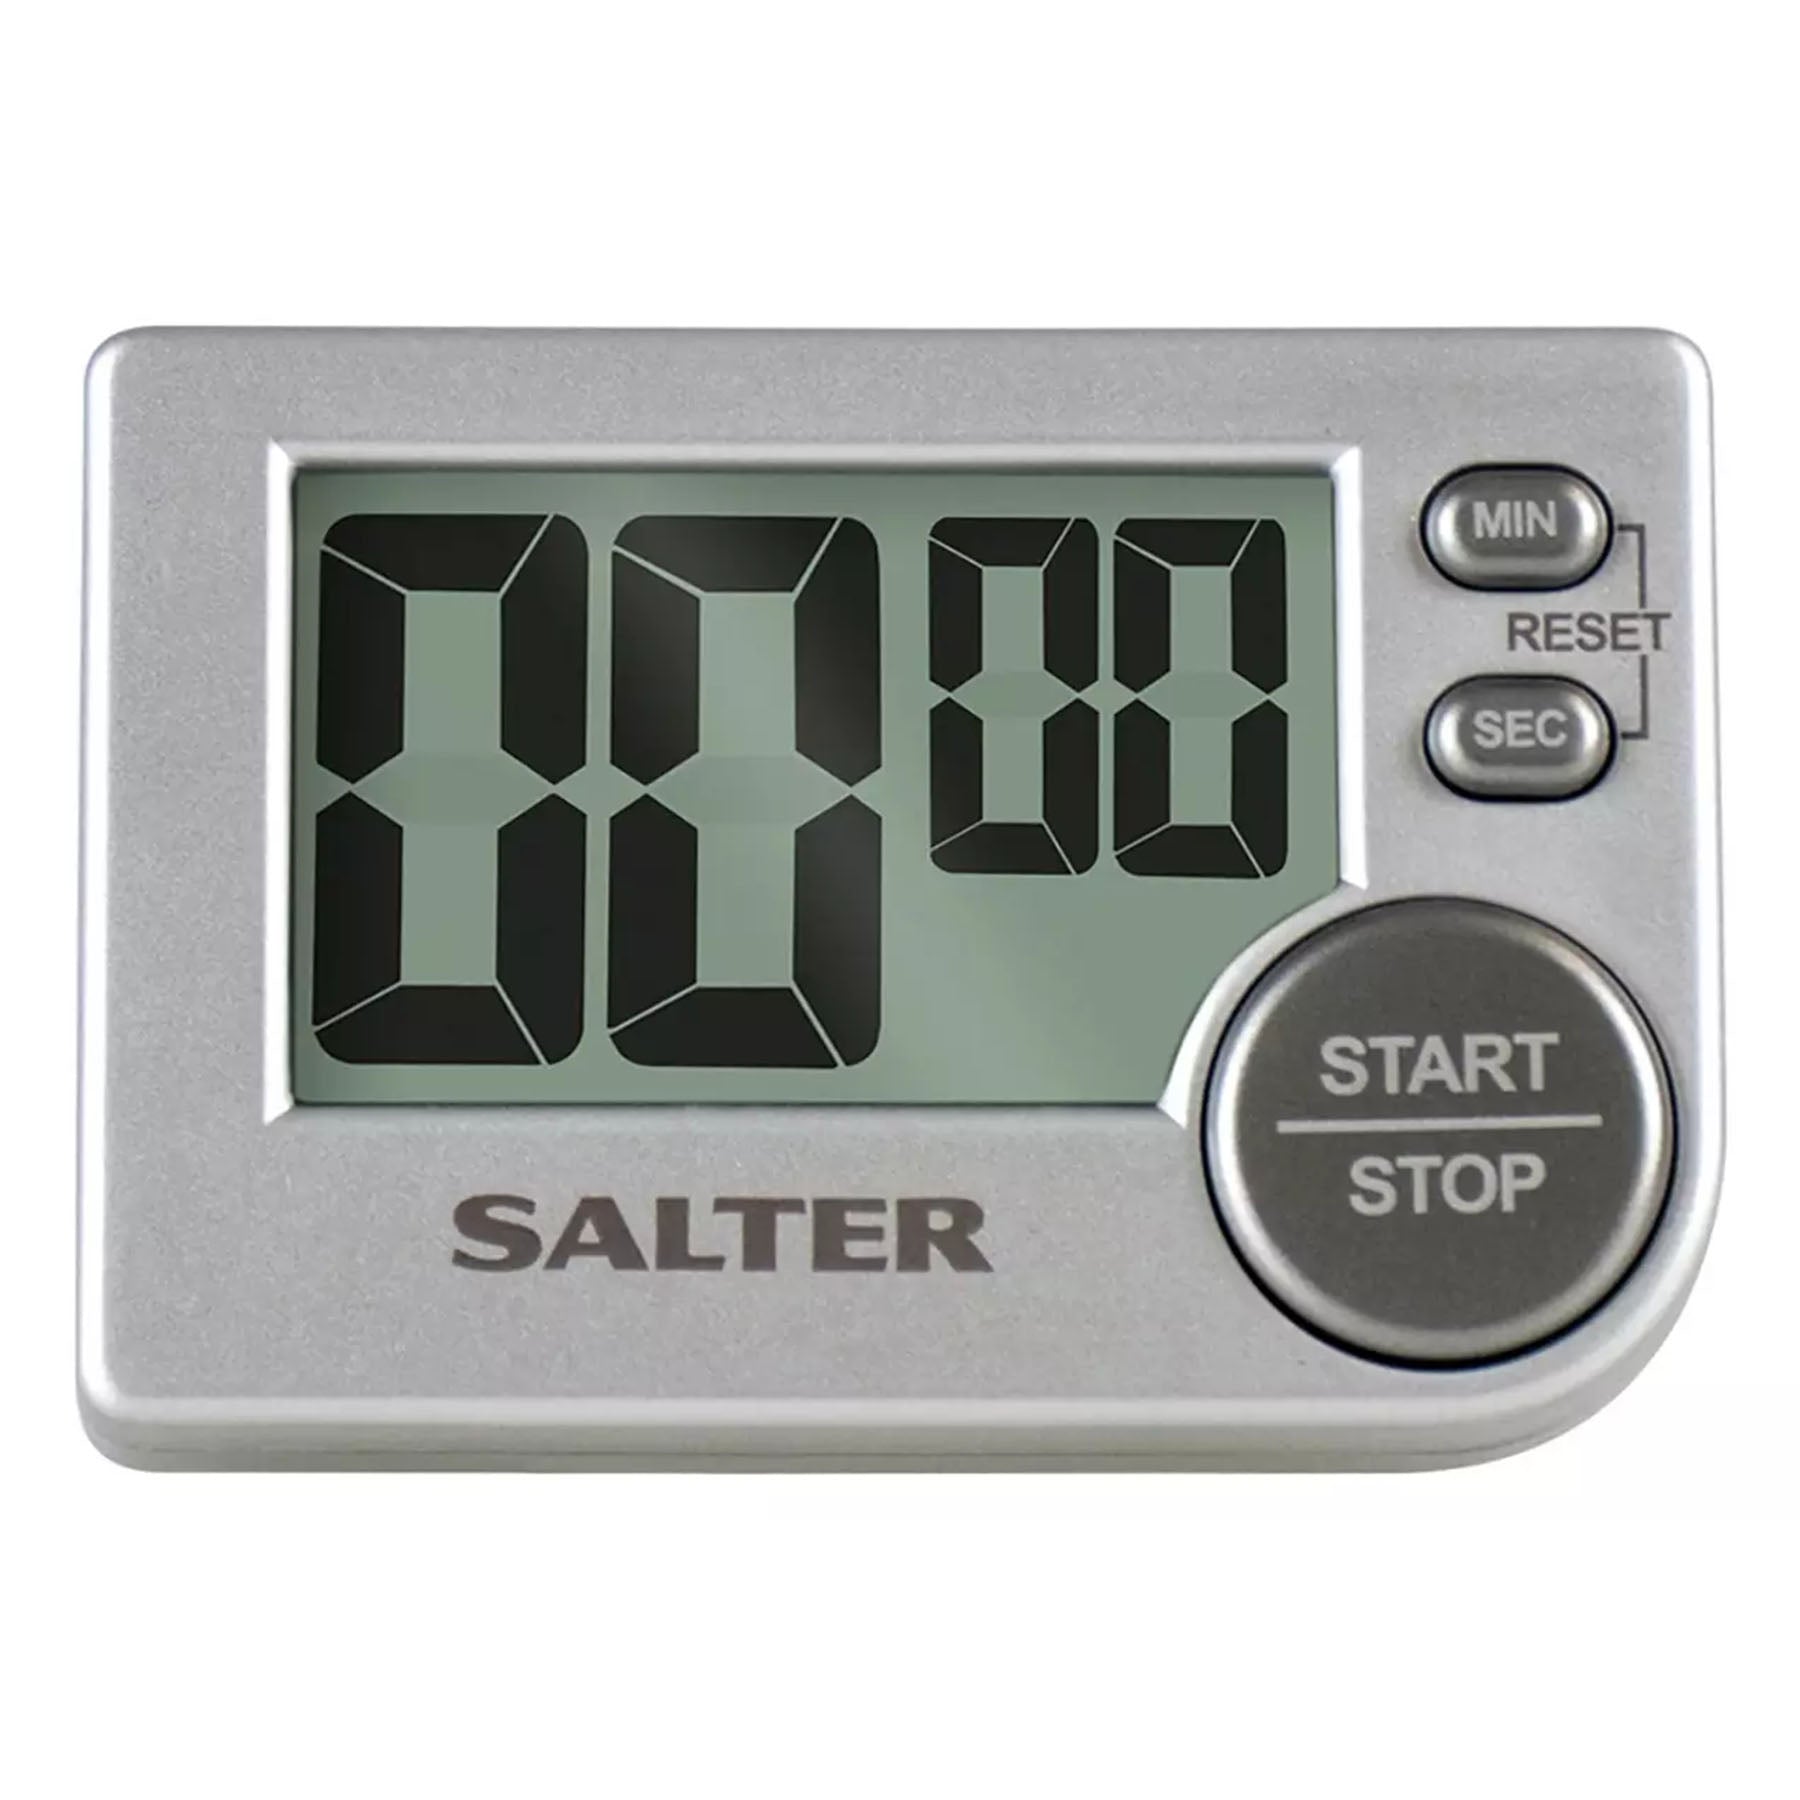 Big button electronic timerDisplay size: 4.8 x 3.0 cm; product dimensions: 7.6 x 1.9 x 5.2 cm